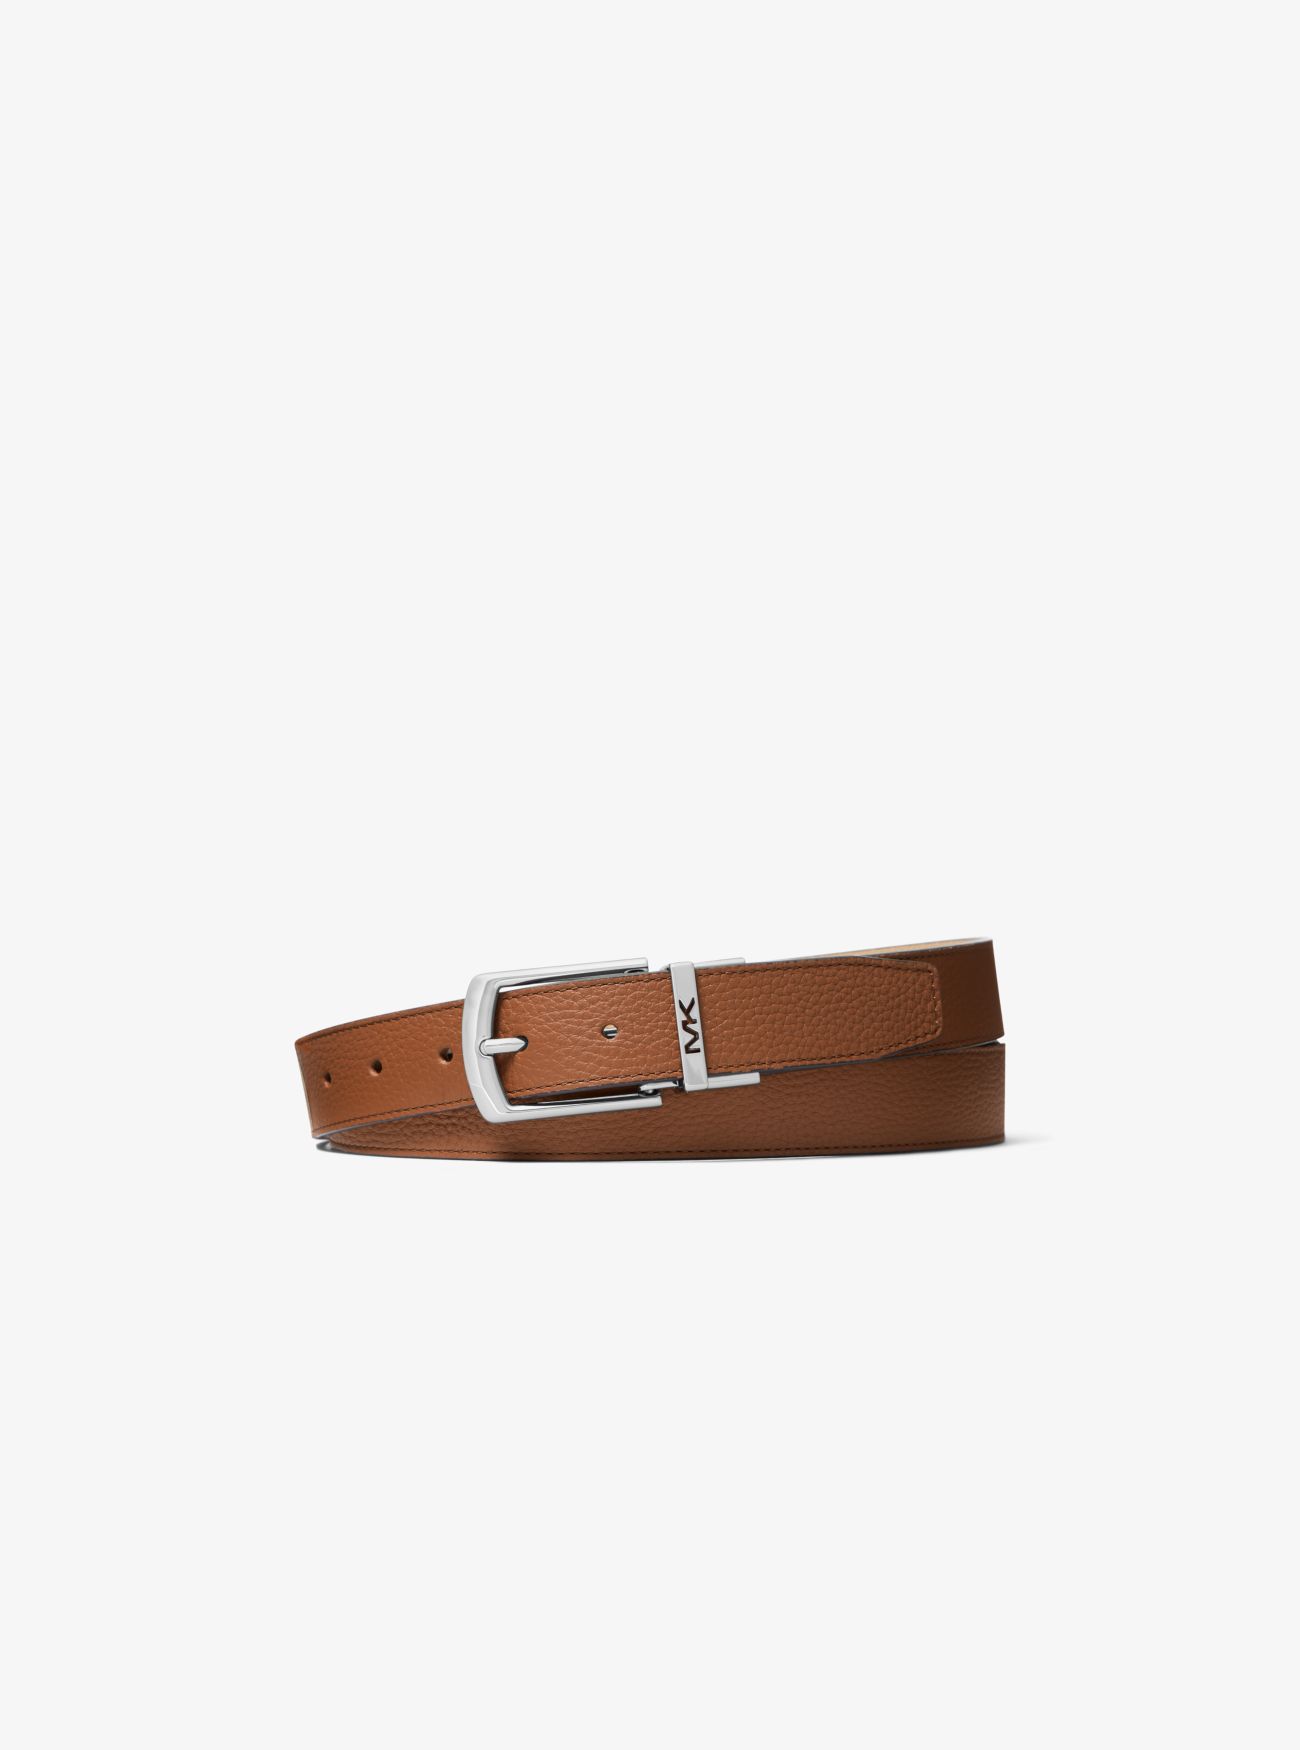 MK Reversible Pebbled Leather Belt - Brown - Michael Kors